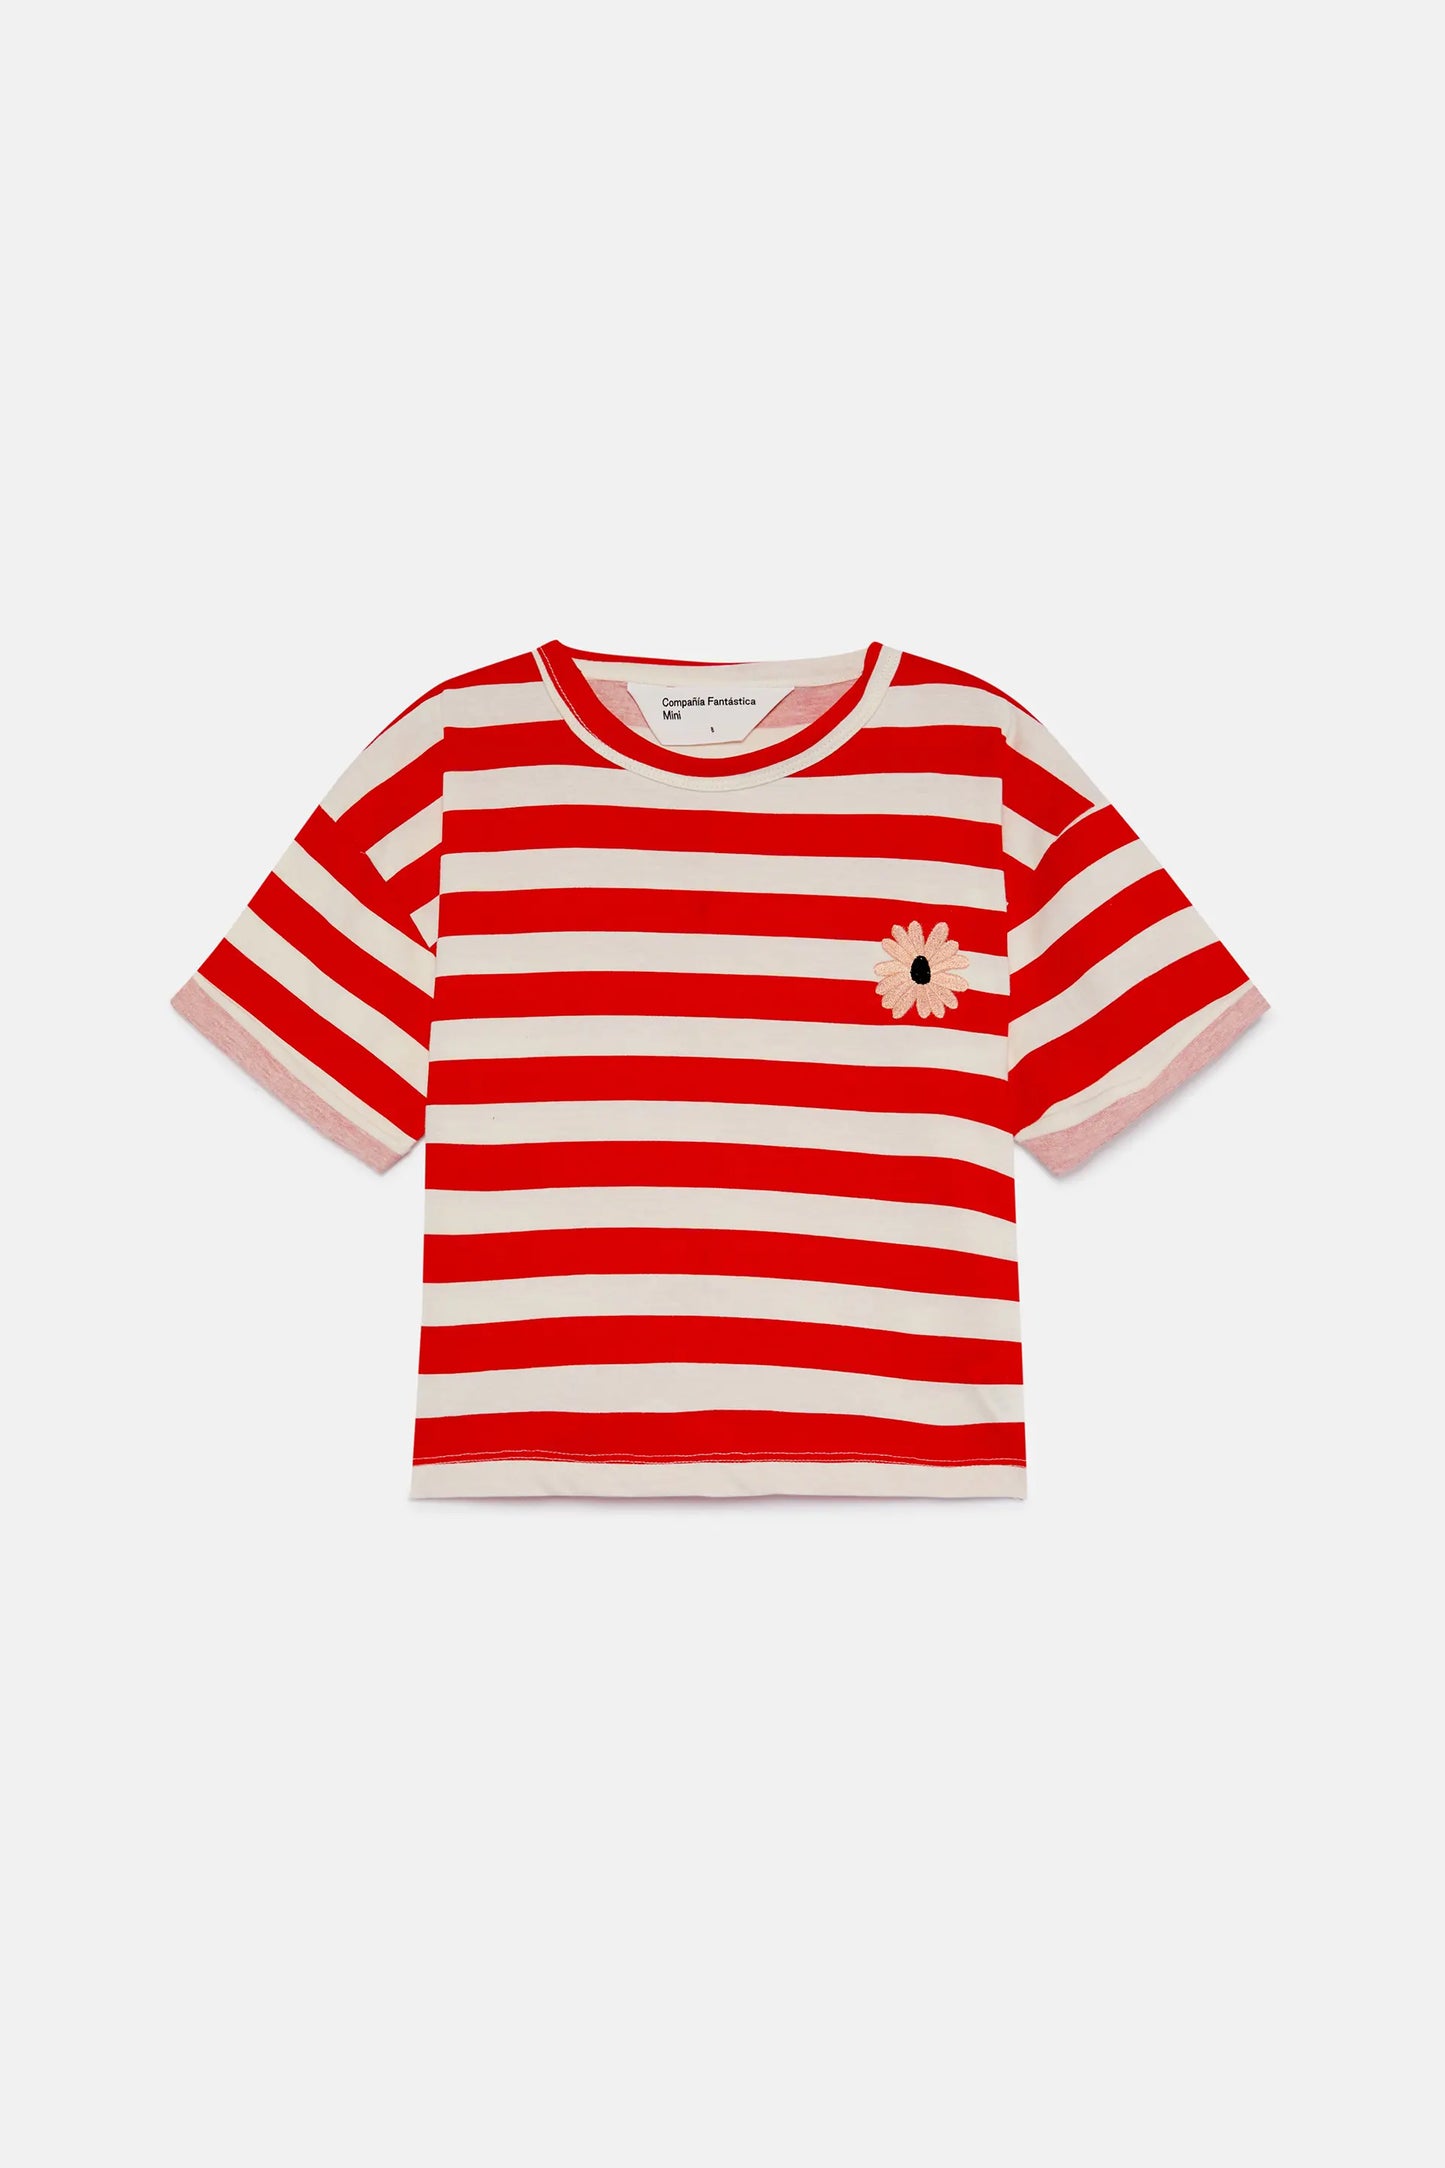 Camiseta unisex de rayas rojas